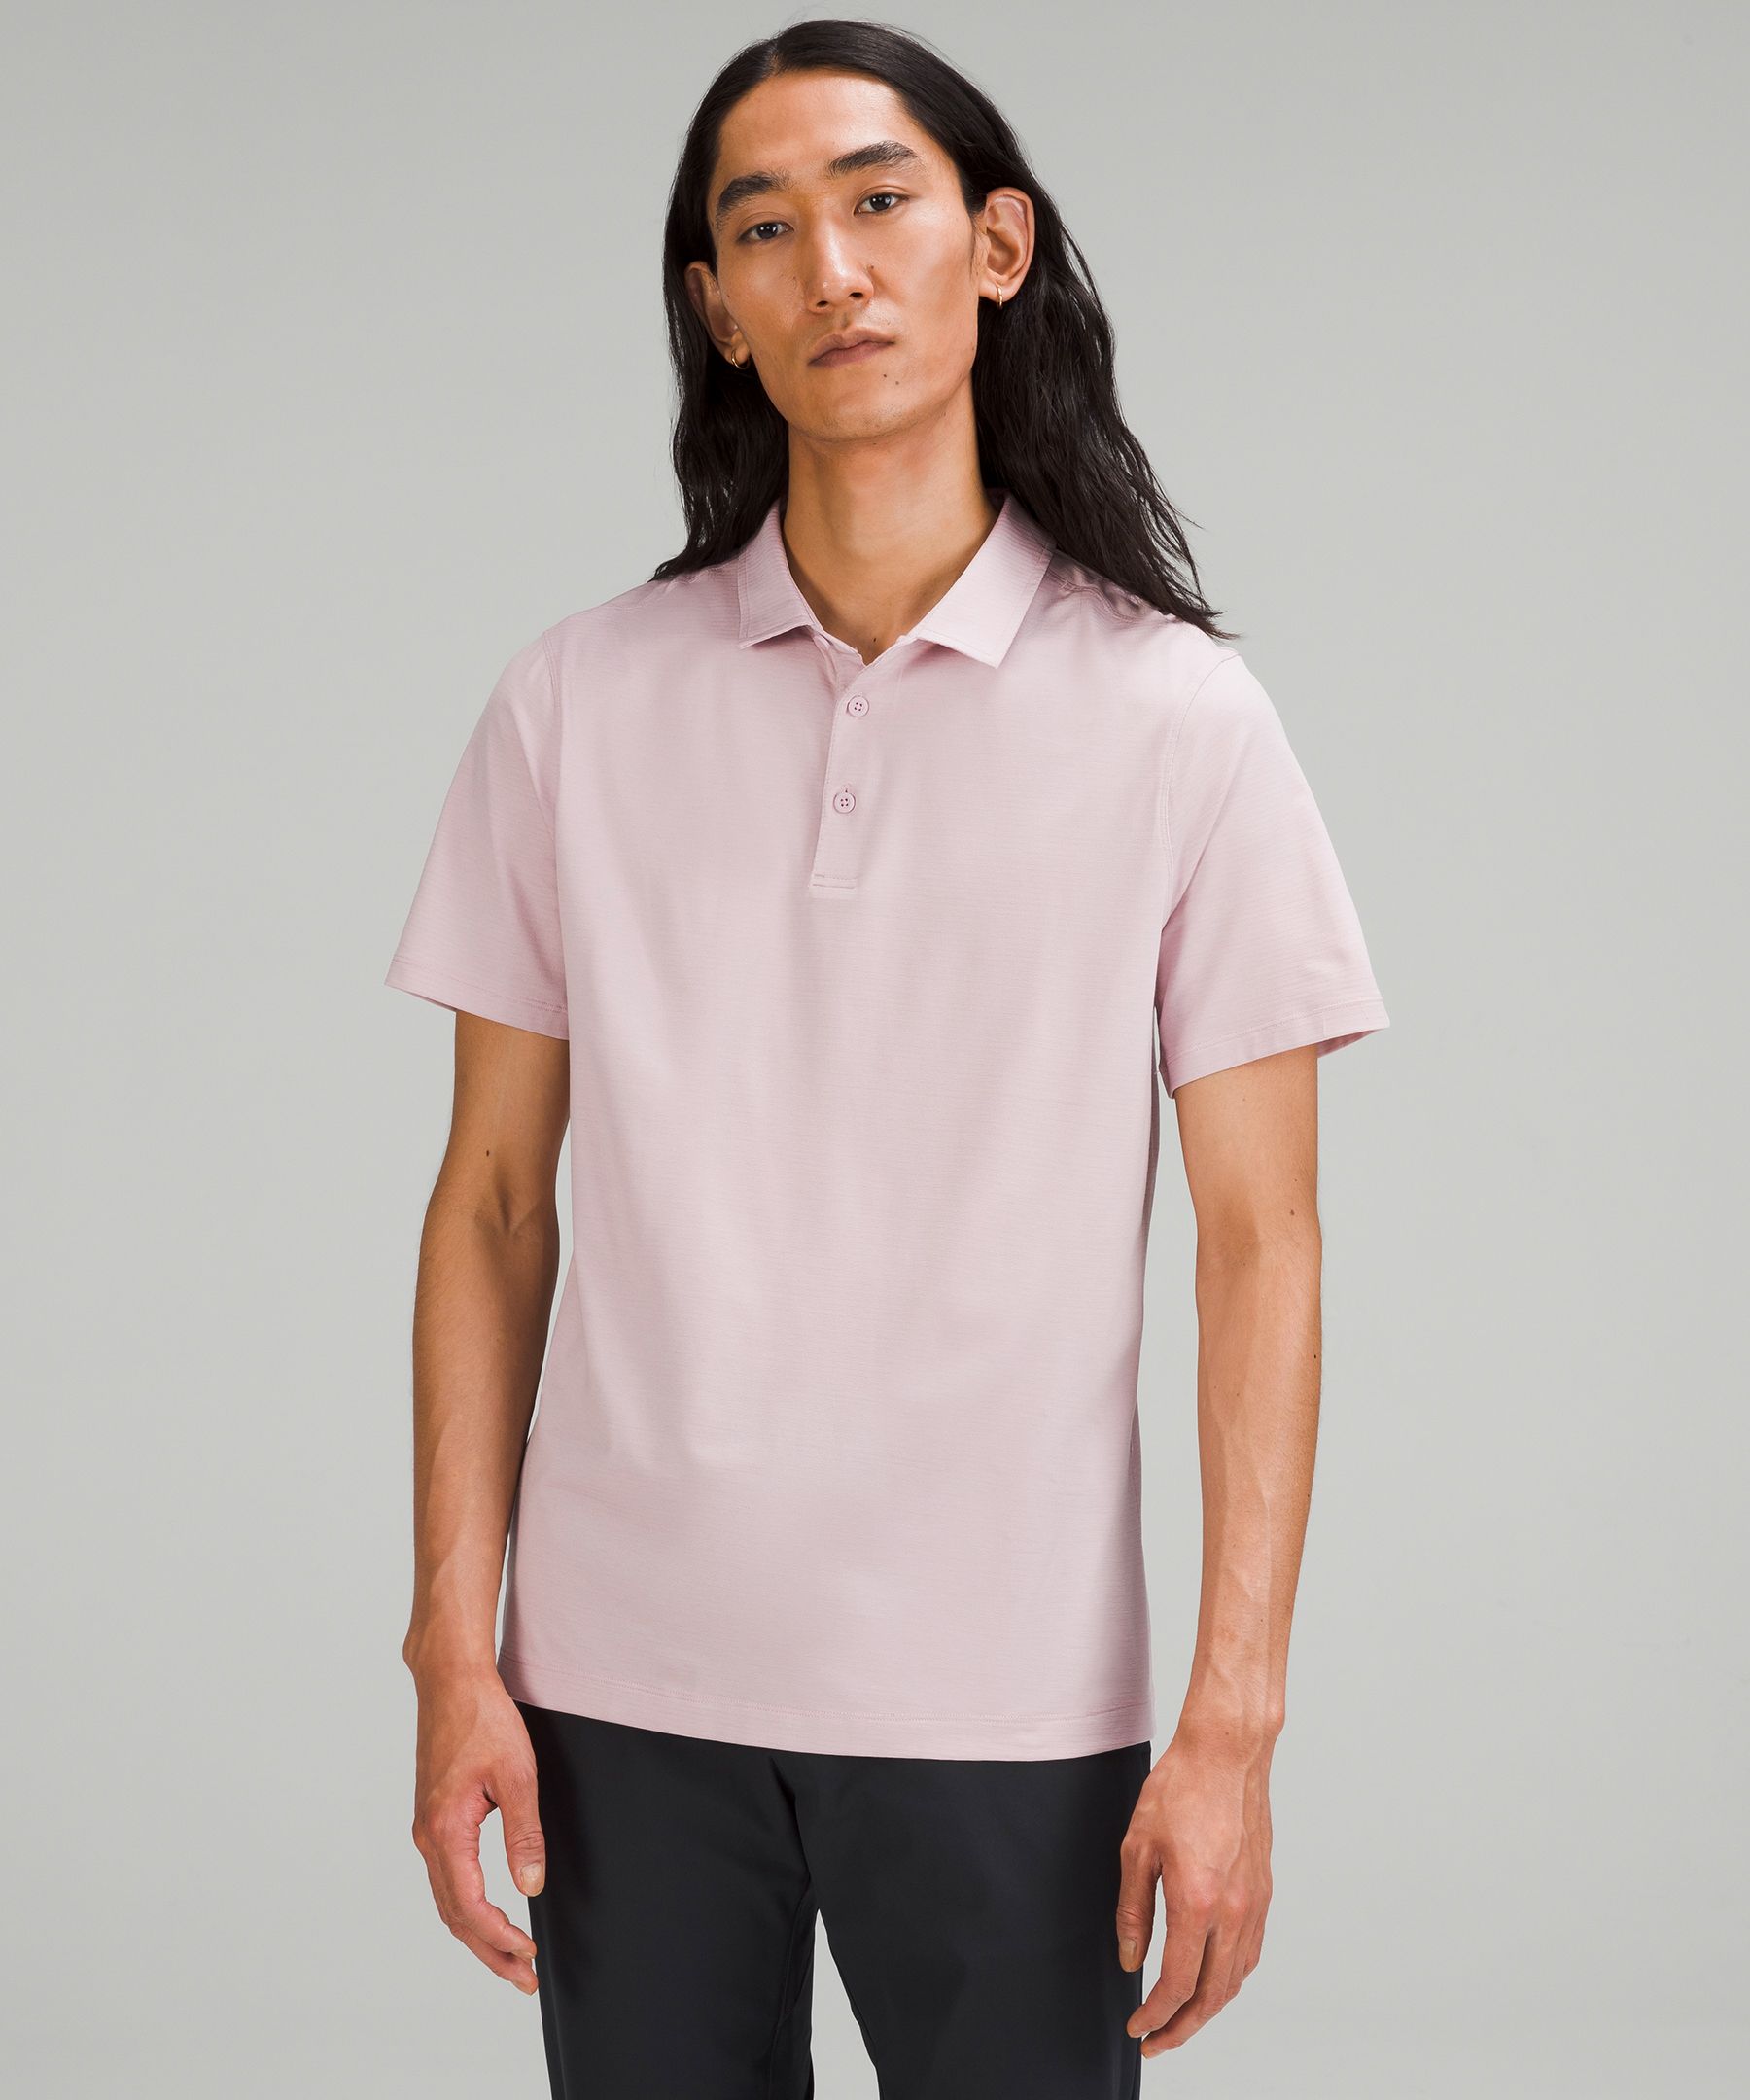 Lululemon Evolution Short Sleeve Polo Shirt